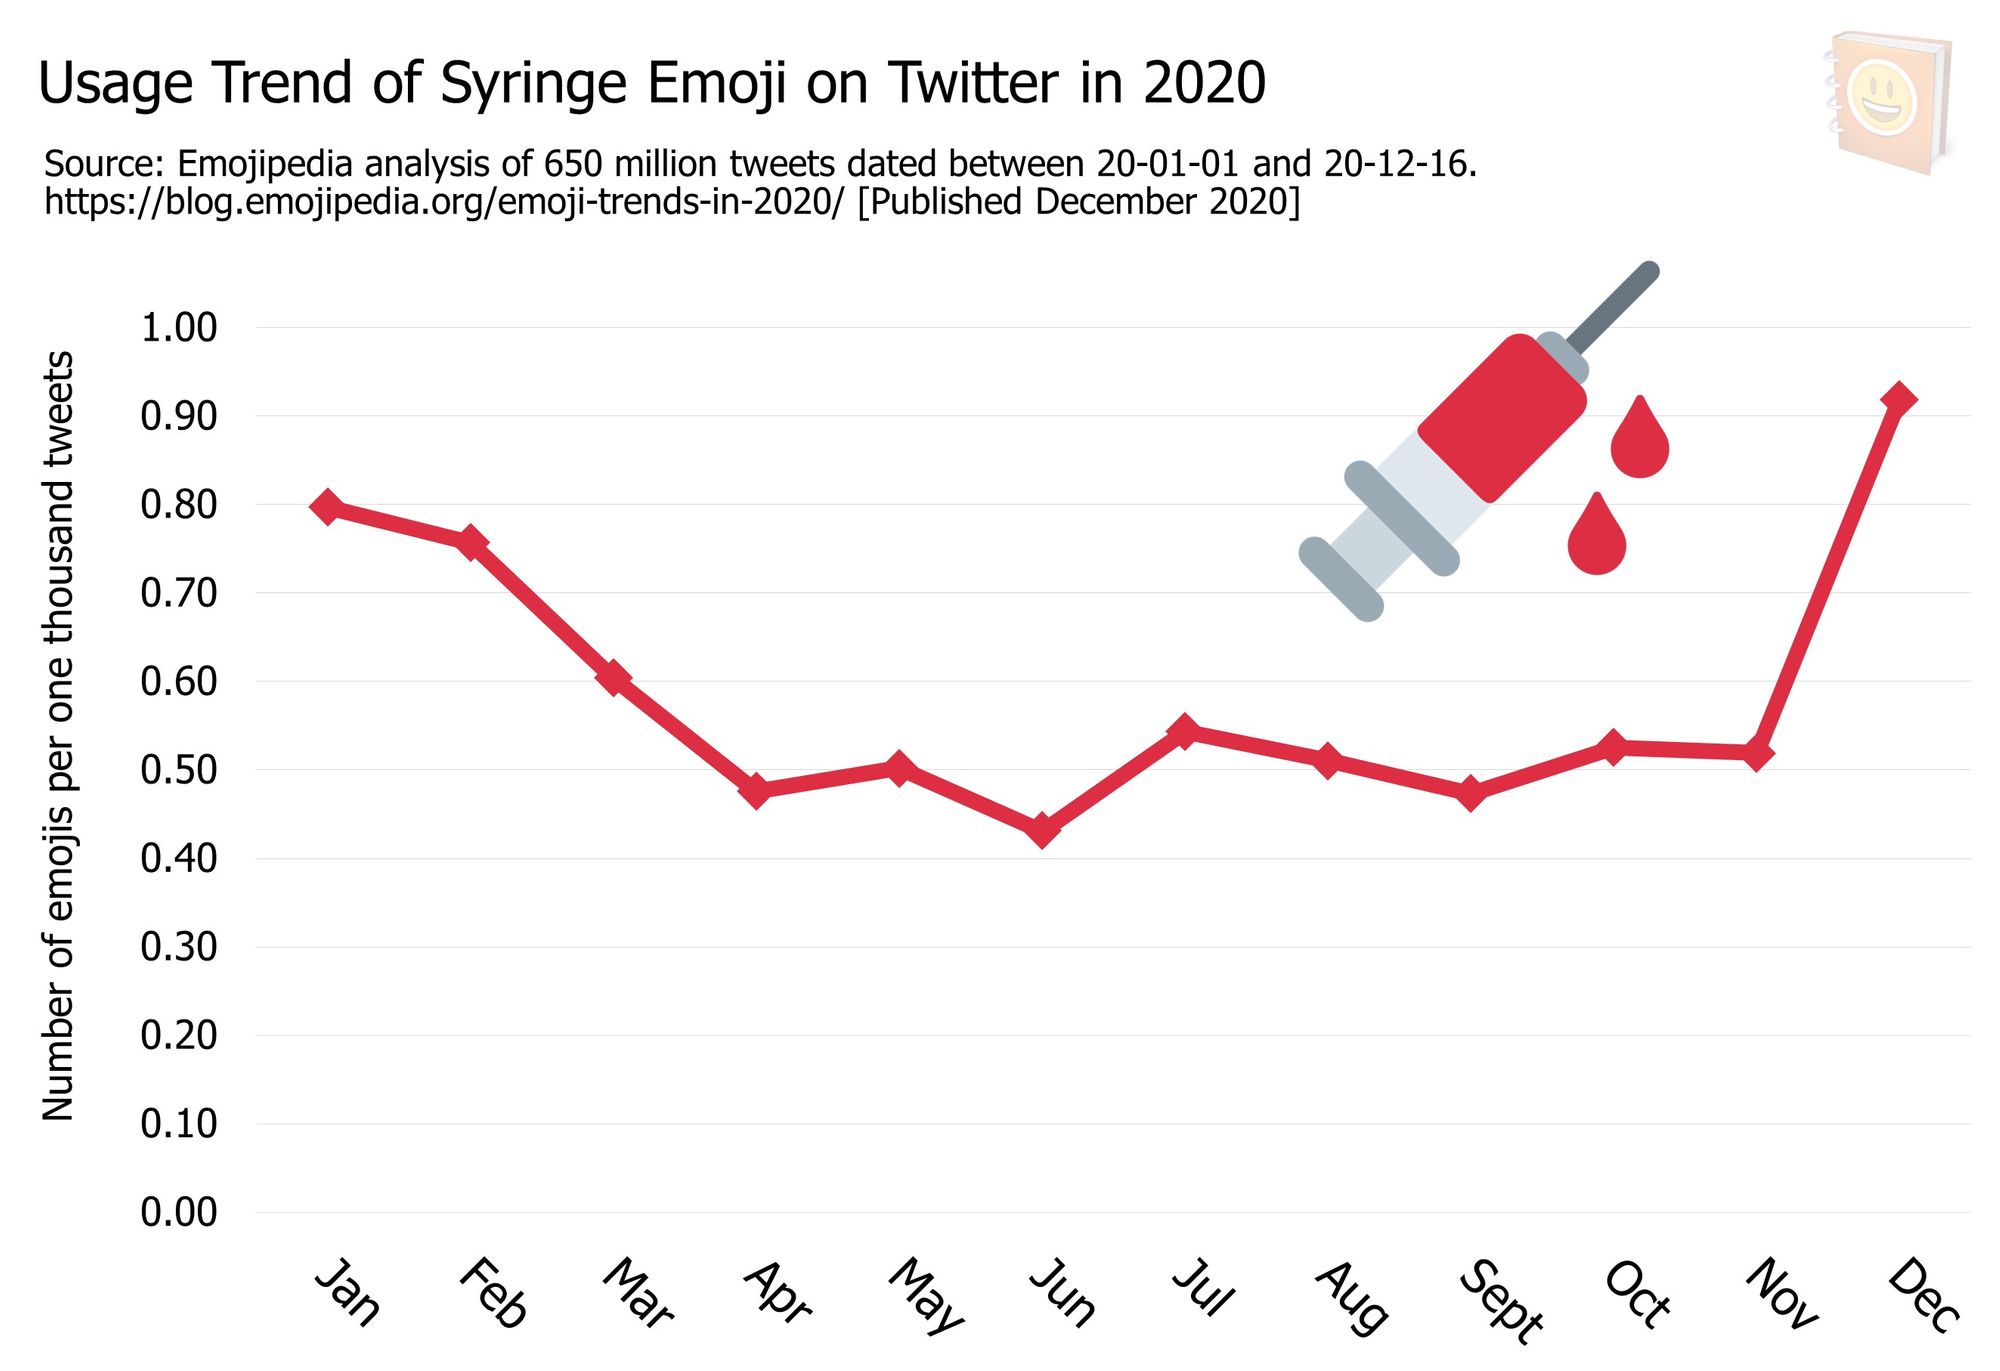 Emoji-Trends-In-2020---Usage-Trend-of-Syringe-Emoji-on-Twitter-in-2020